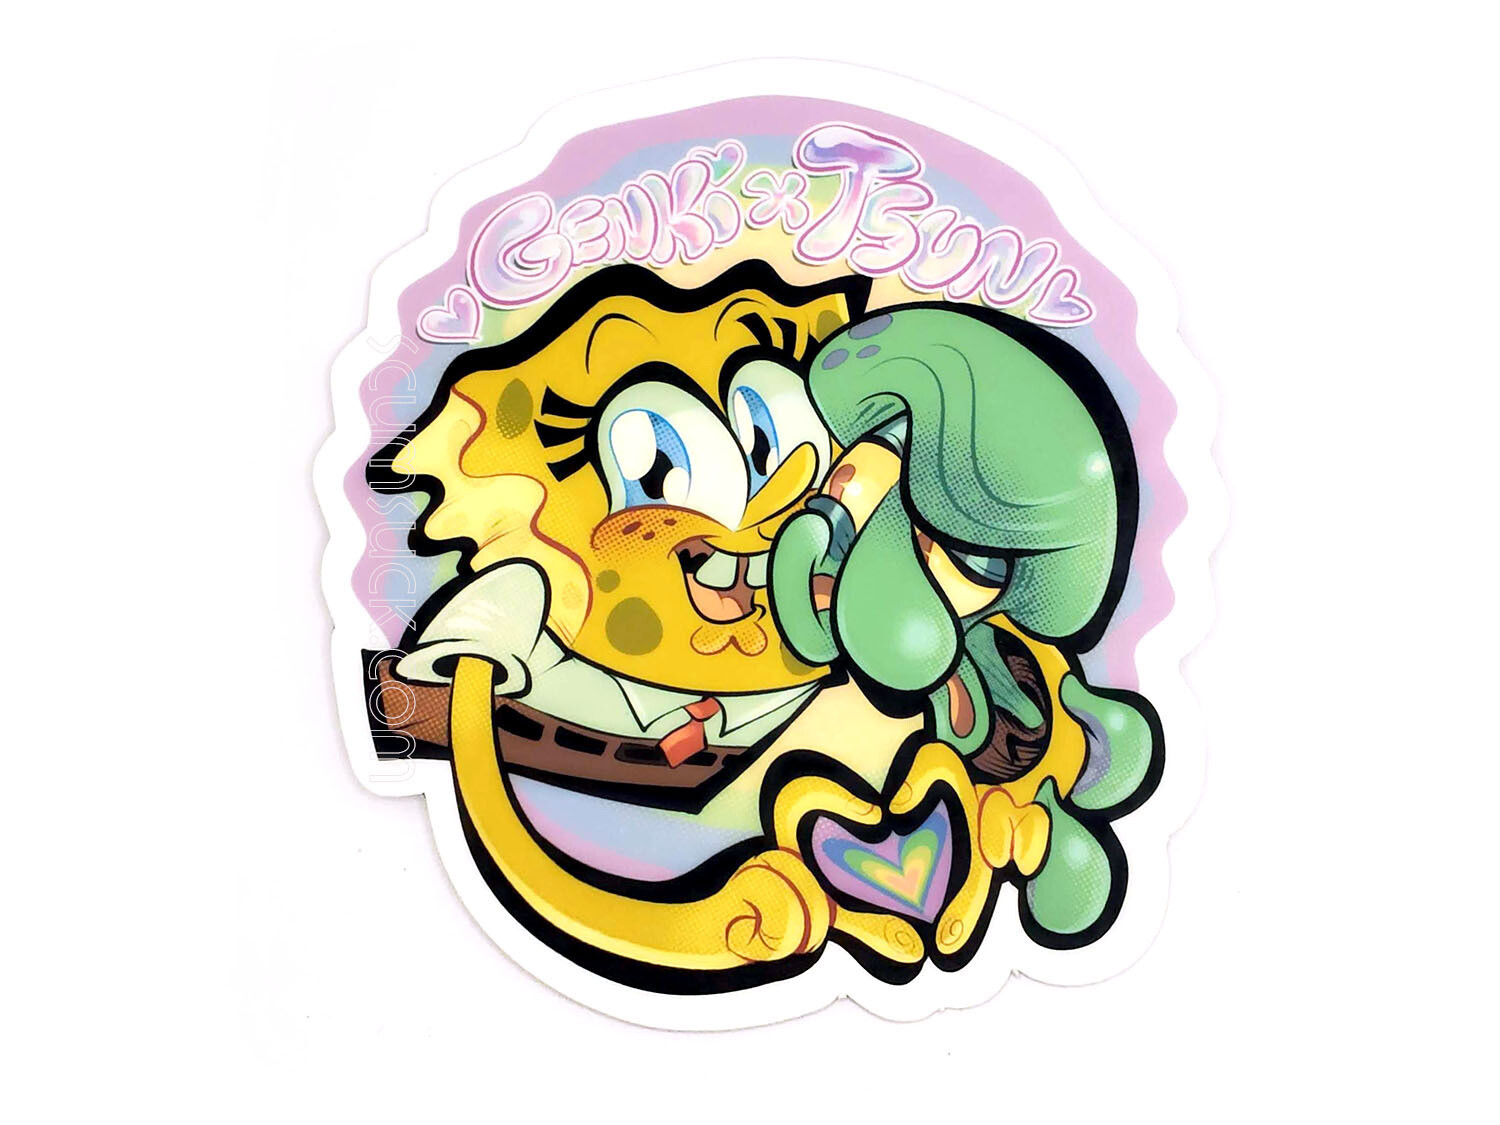 Genki x Tsundere! SpongeSquid sticker